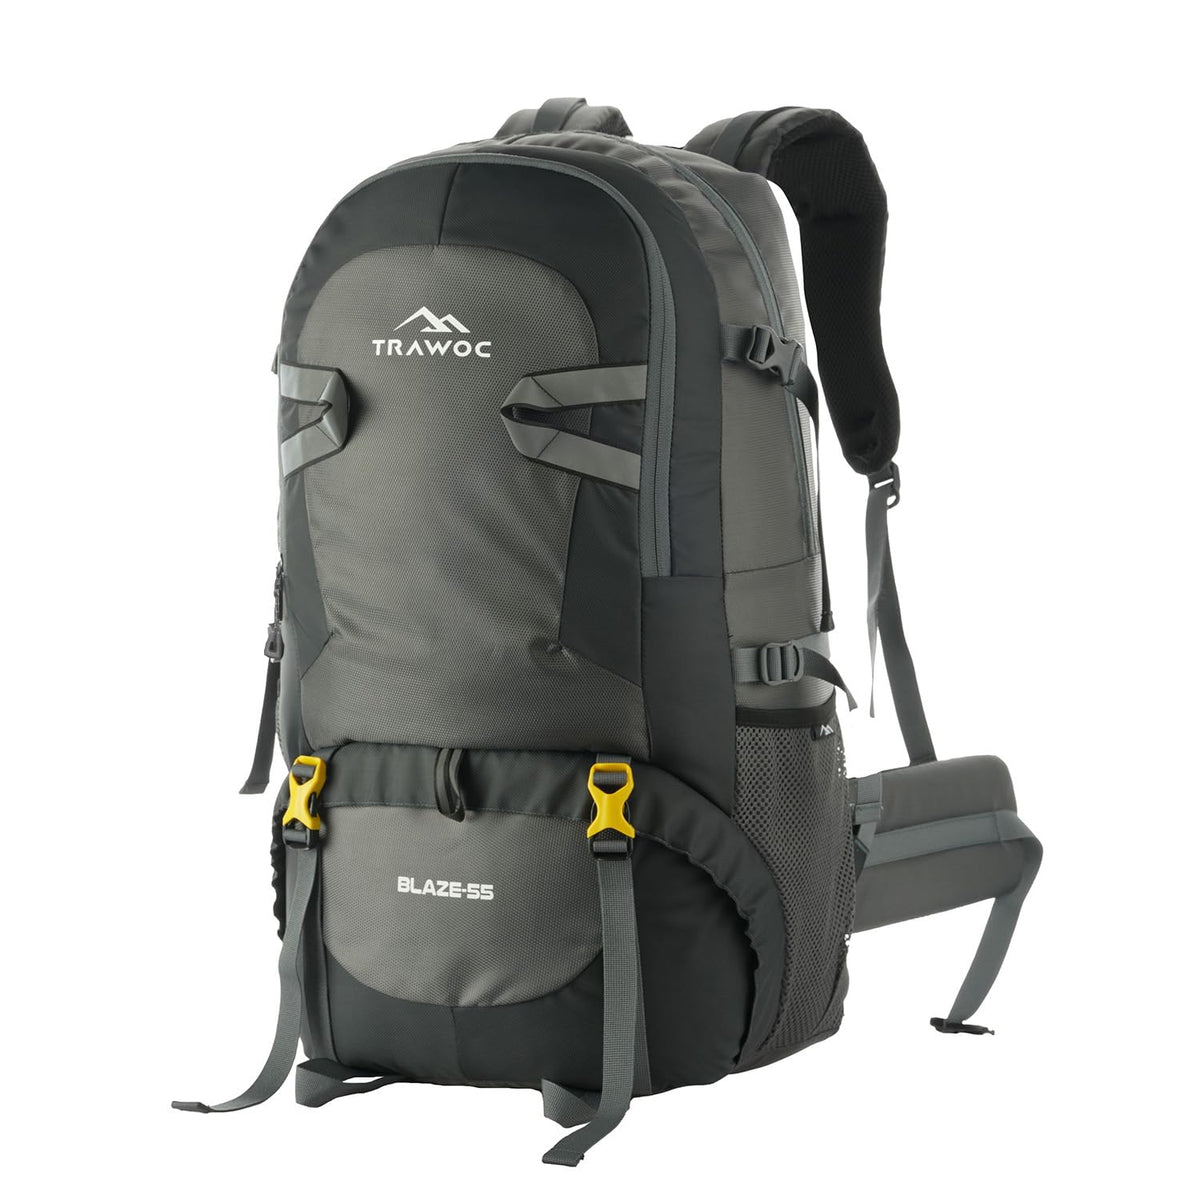 BLAZE-55 Backpack - Grey